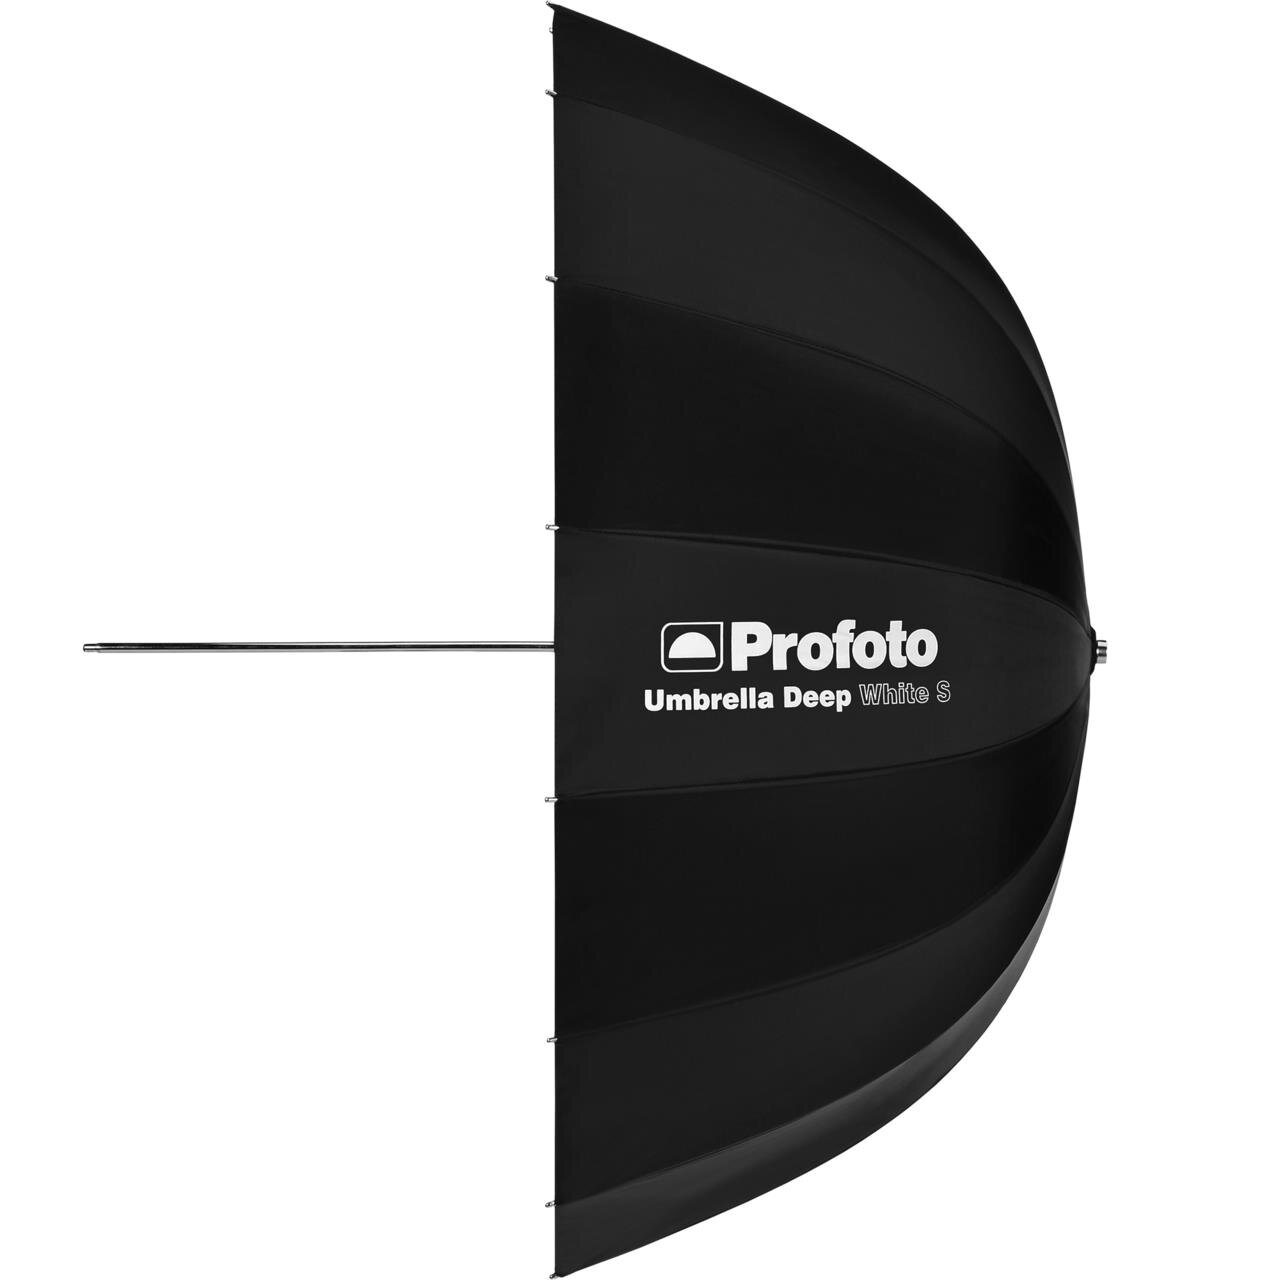 100983_c_profoto-umbrella-deep-white-s-profile-left_productimage.png.jpeg